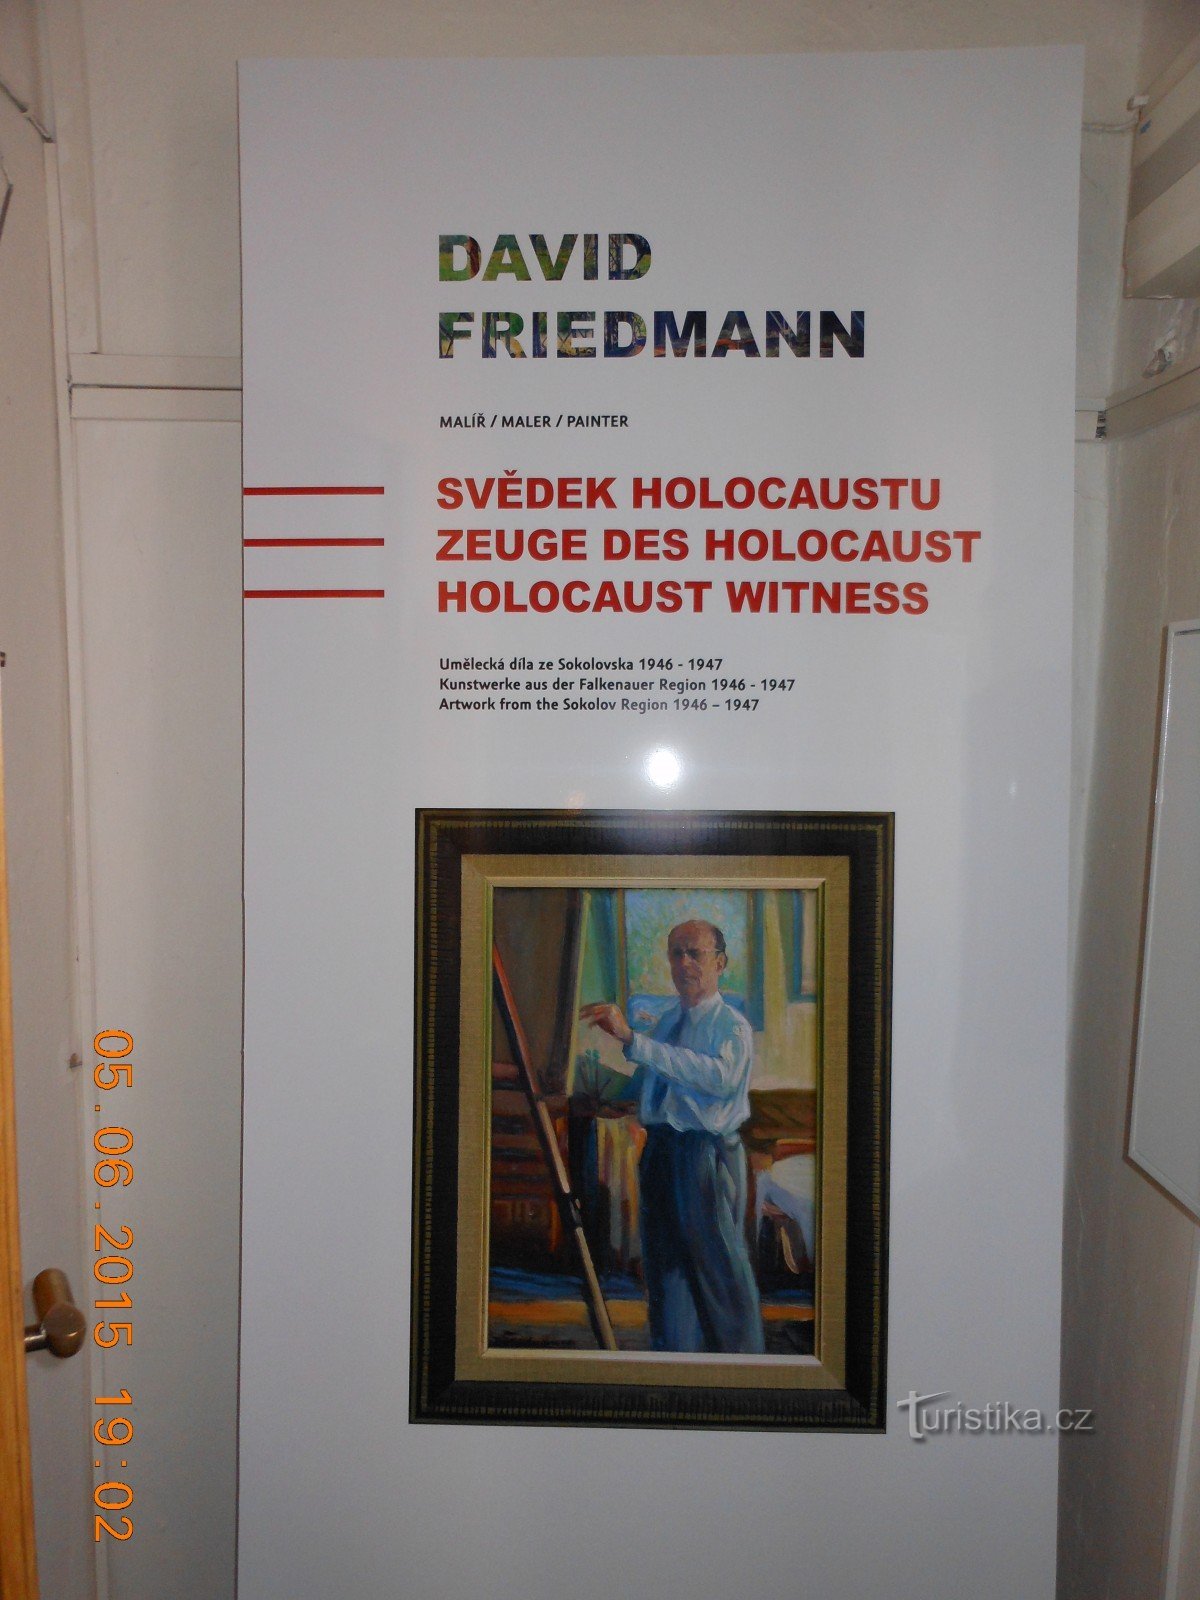 Mostra DAVID FRIEDMANN - Museo Sokolov